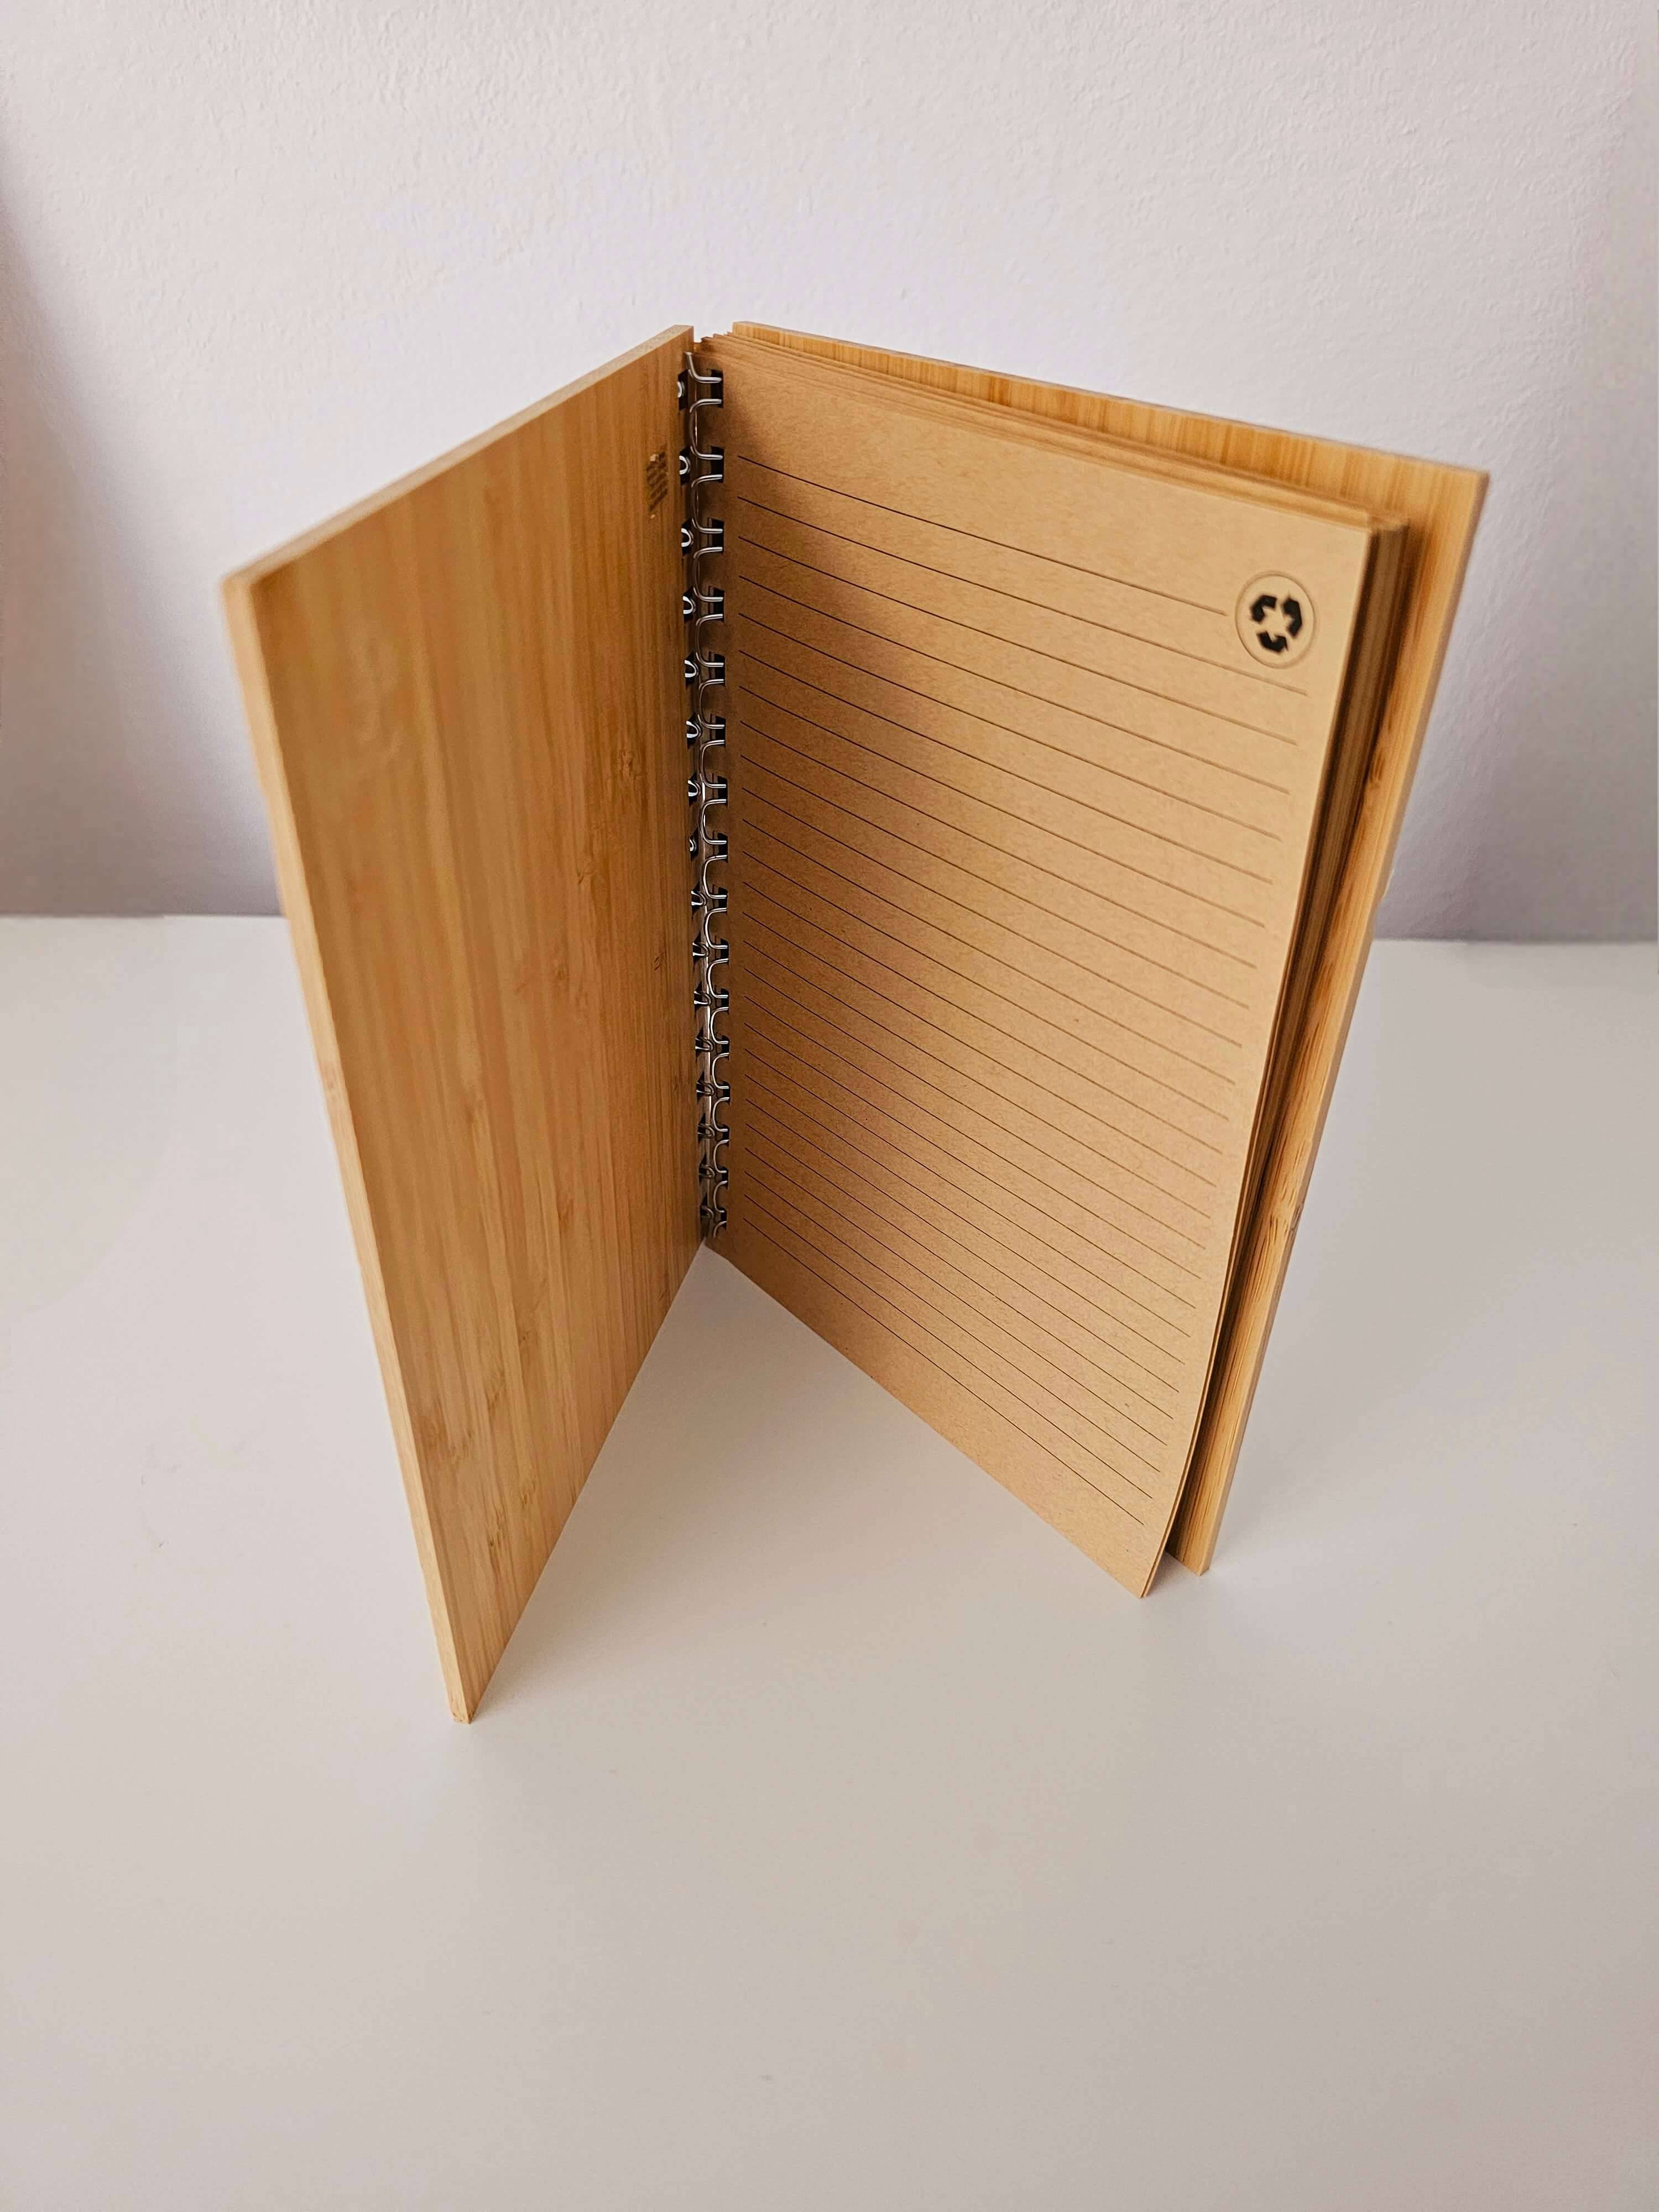 Carnet Notebook A5 bambus, imprimat - Minunea Naturii